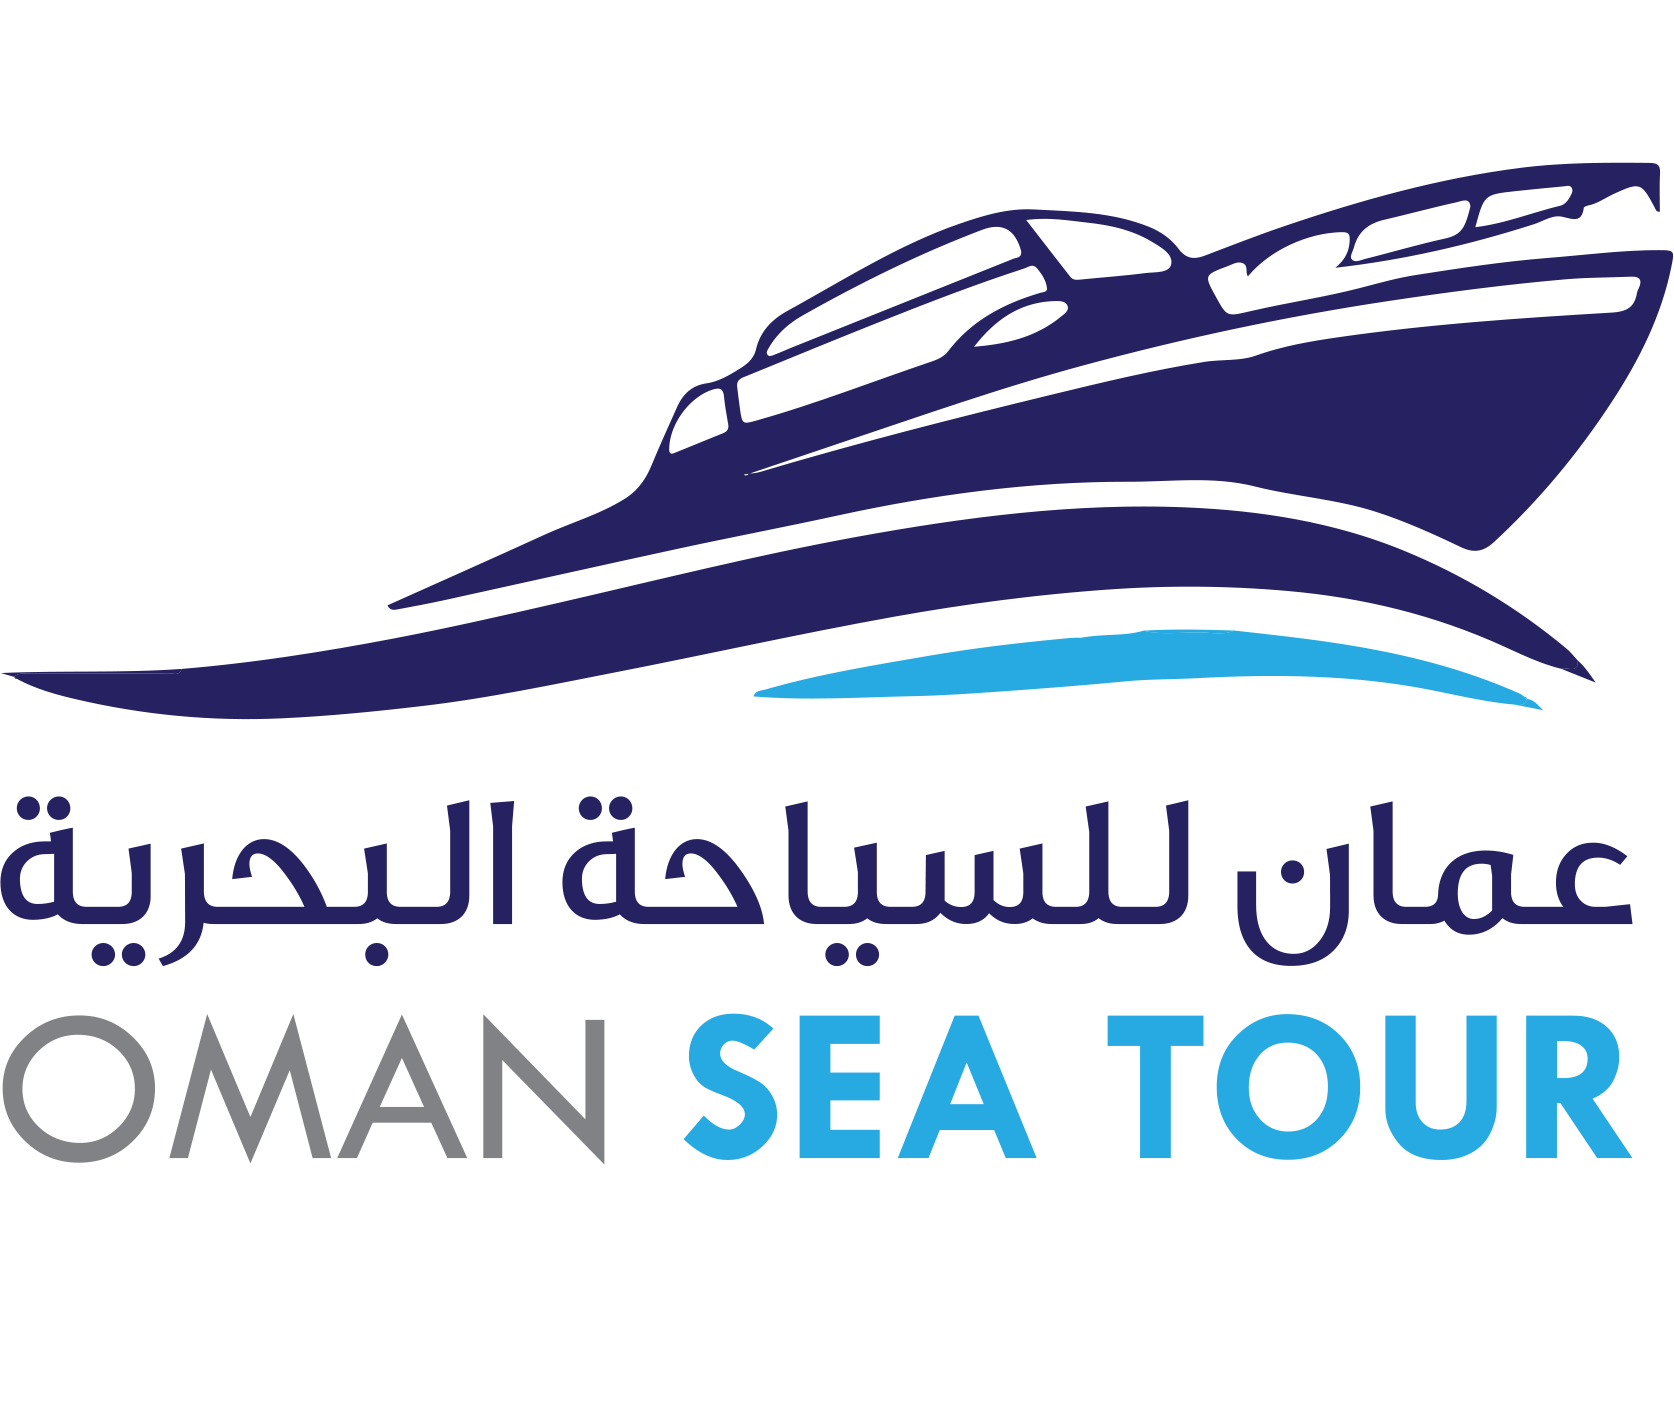 Oman Set Tour